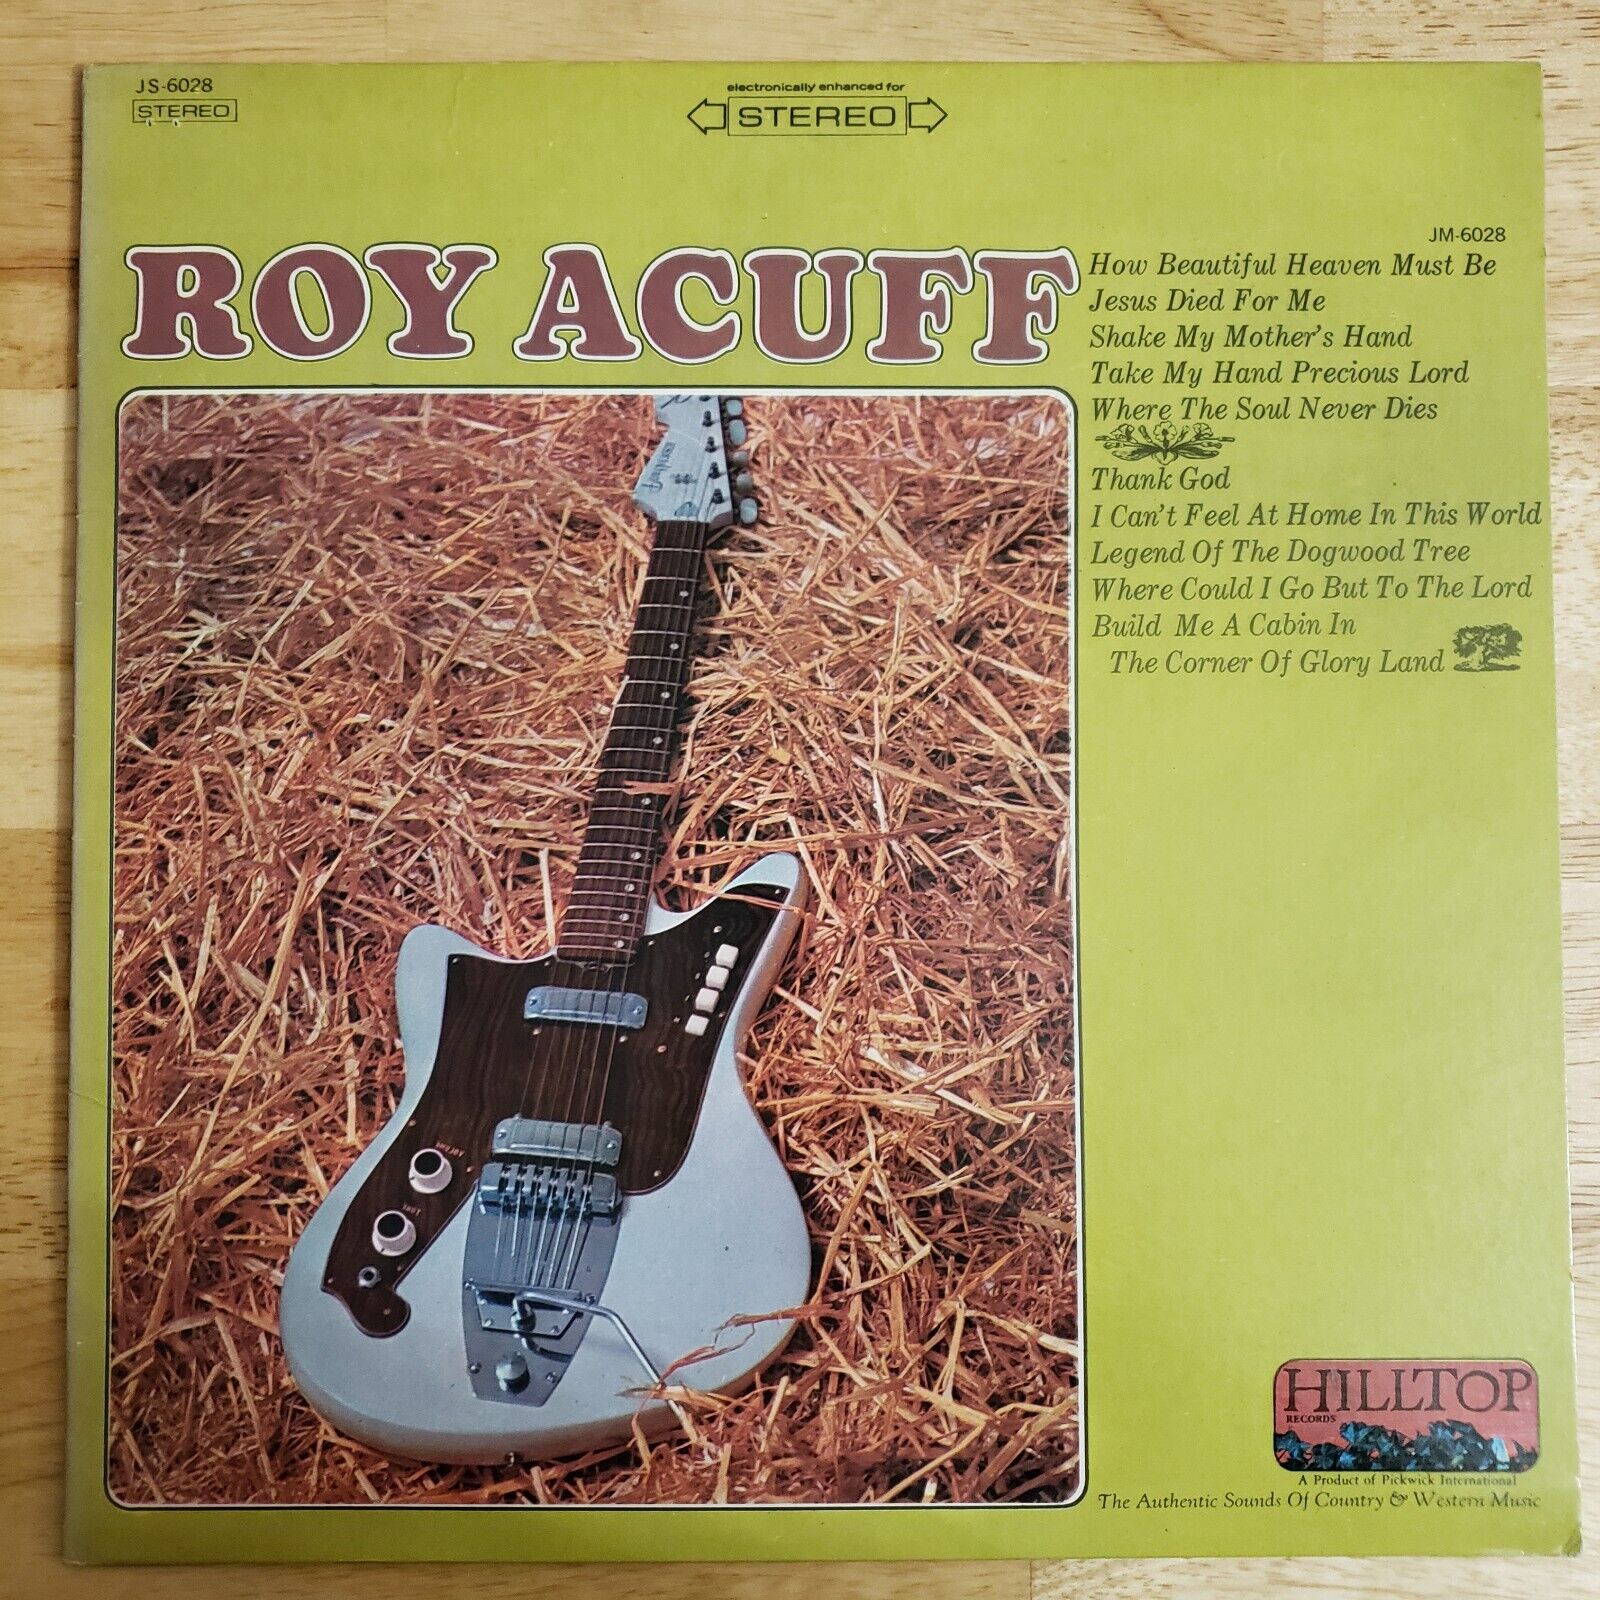 Roy Acuff - Roy Acuff - Vinyl LP 1966 Hilltop Records JS-6028 - Excellent